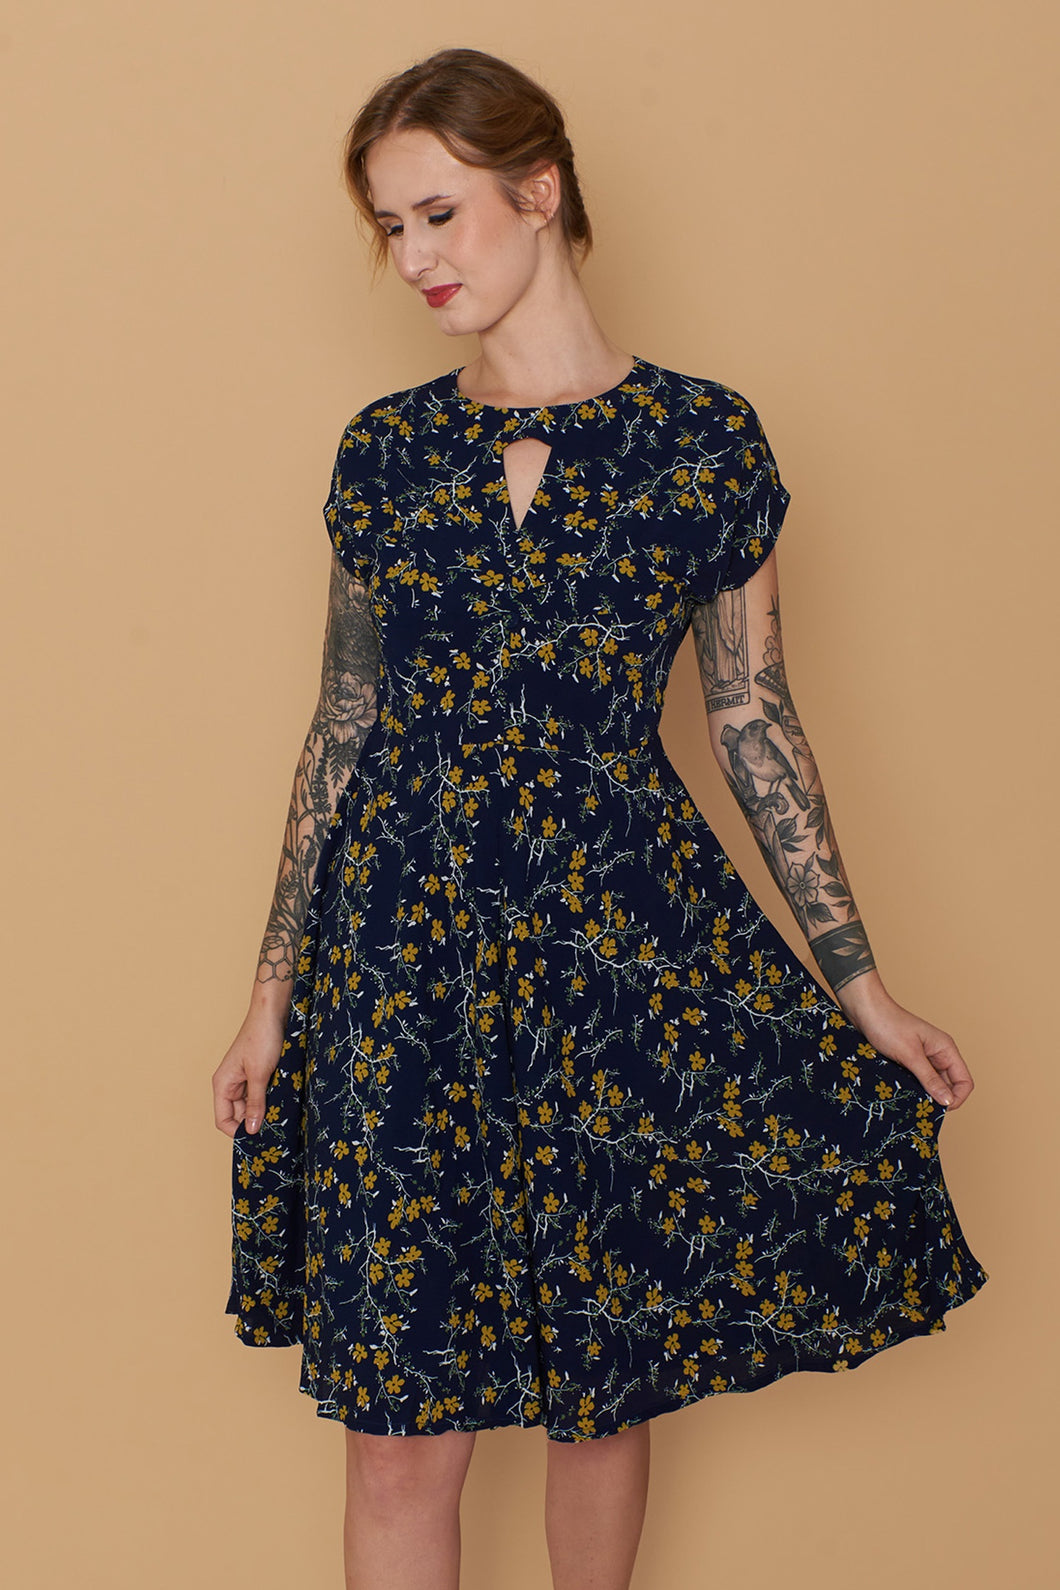 Kay Floral Mustard Dress